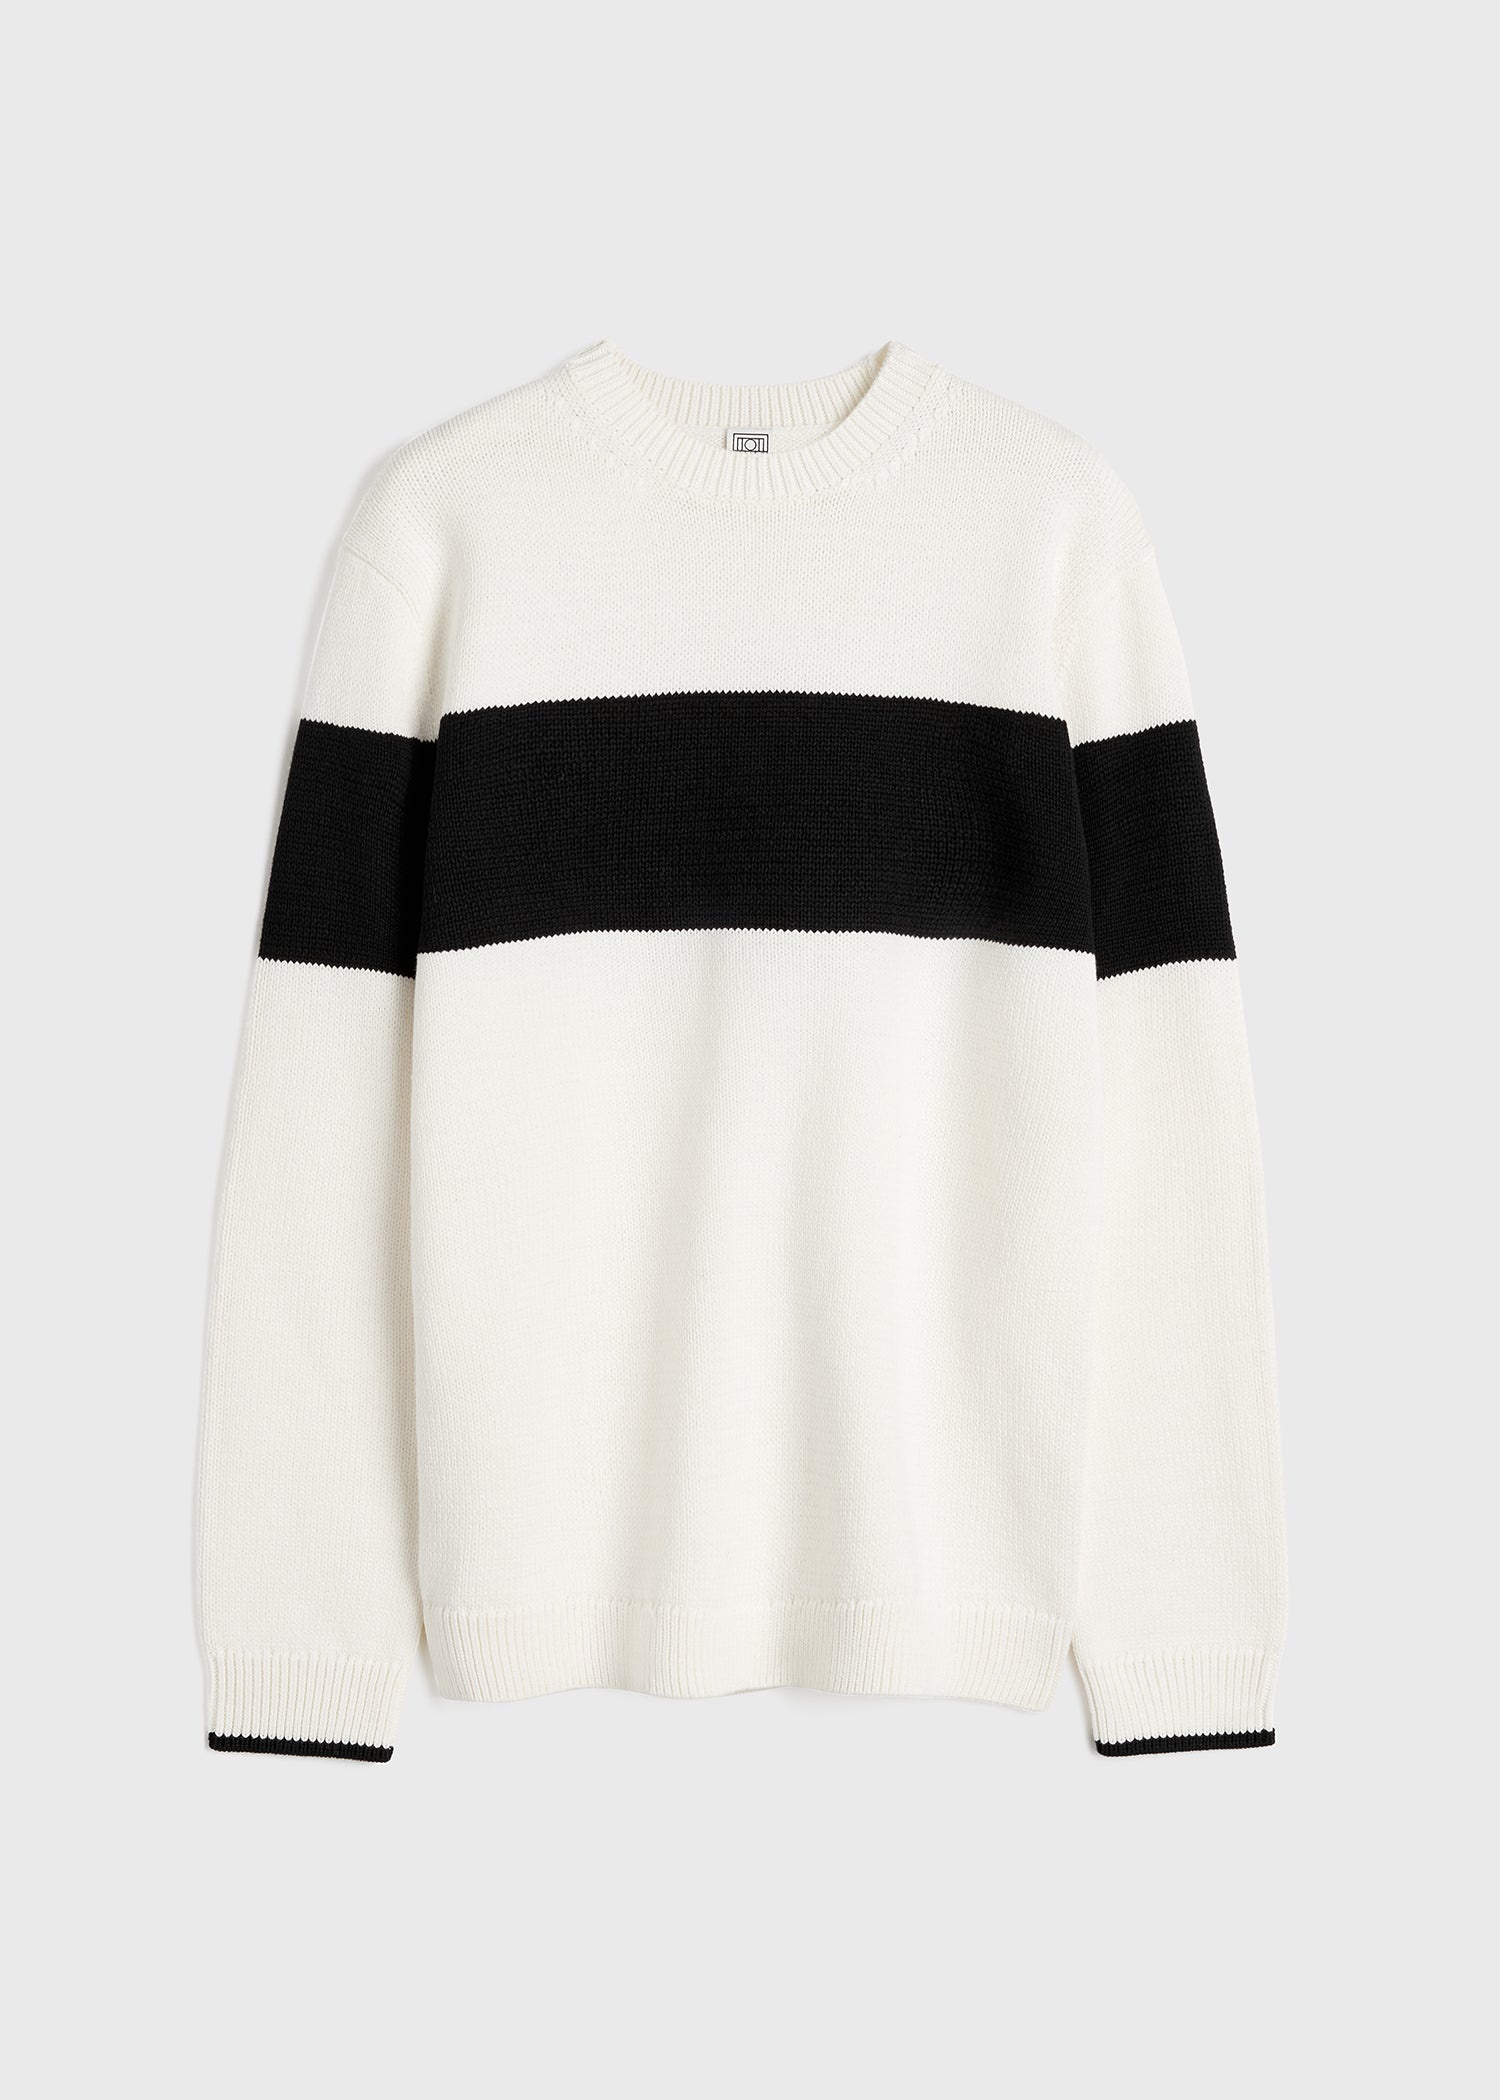 Contrast-stripe knit white/black - 1